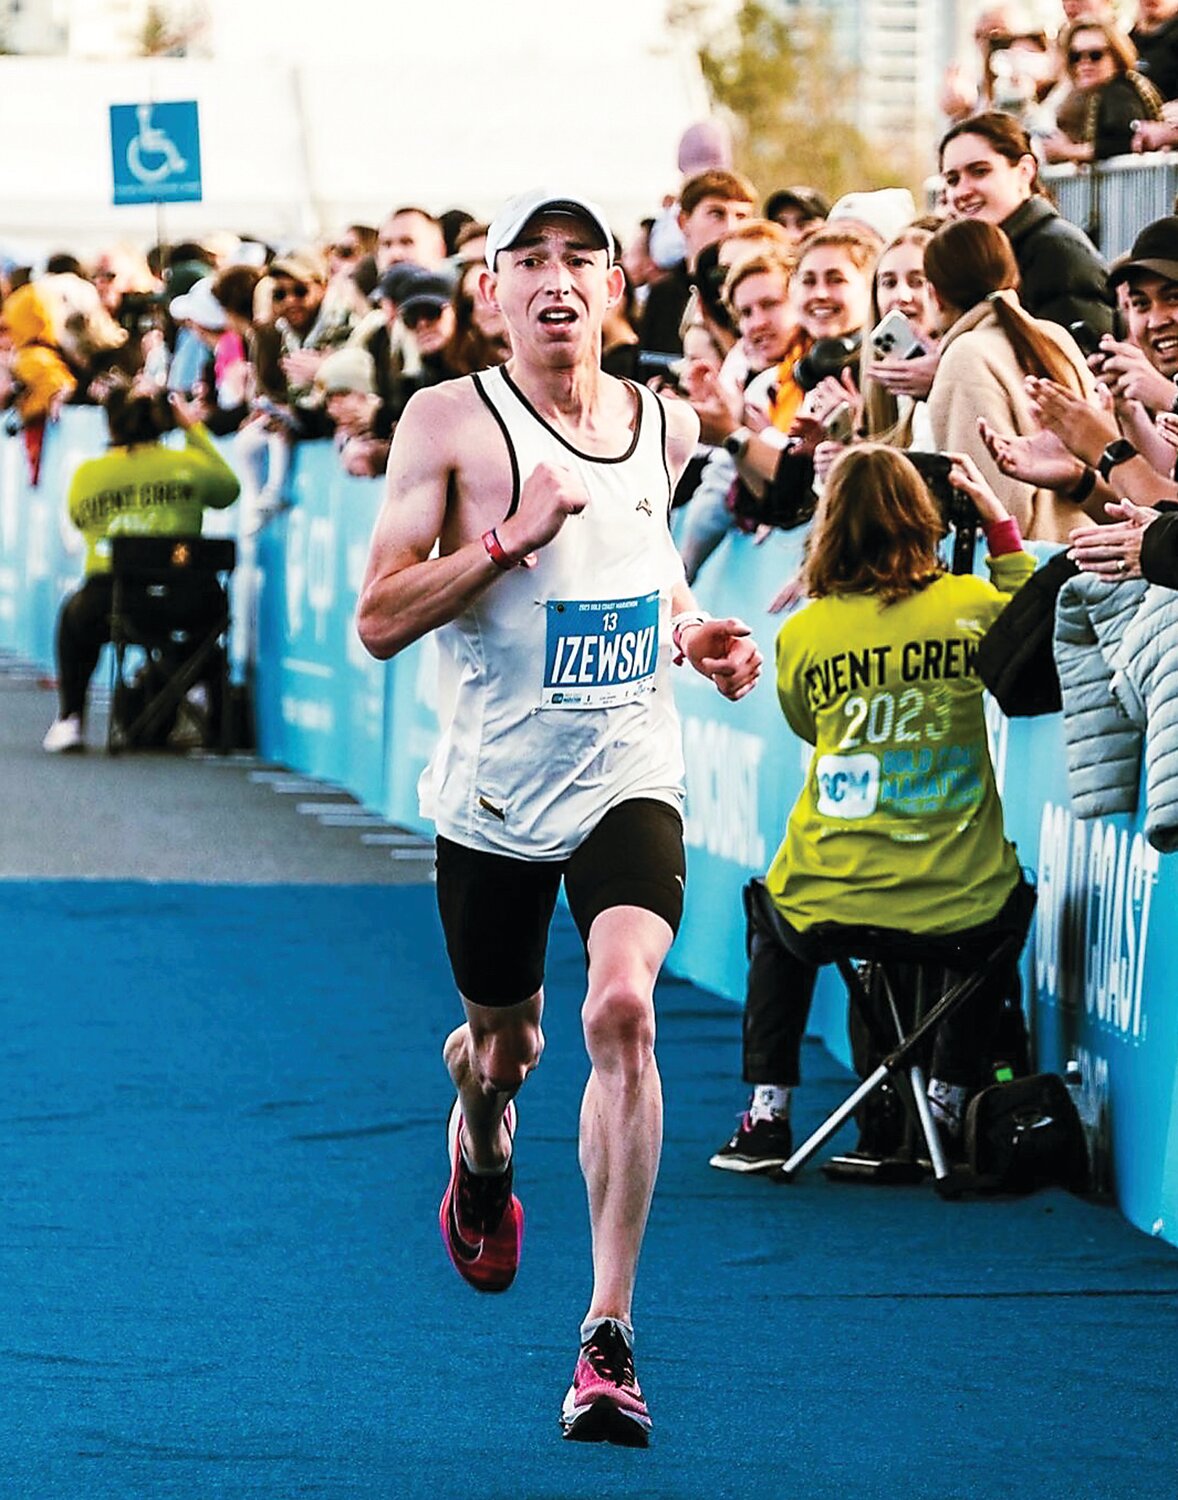 Josh Izewski crosses the finish line at the Gold Coast Marathon.